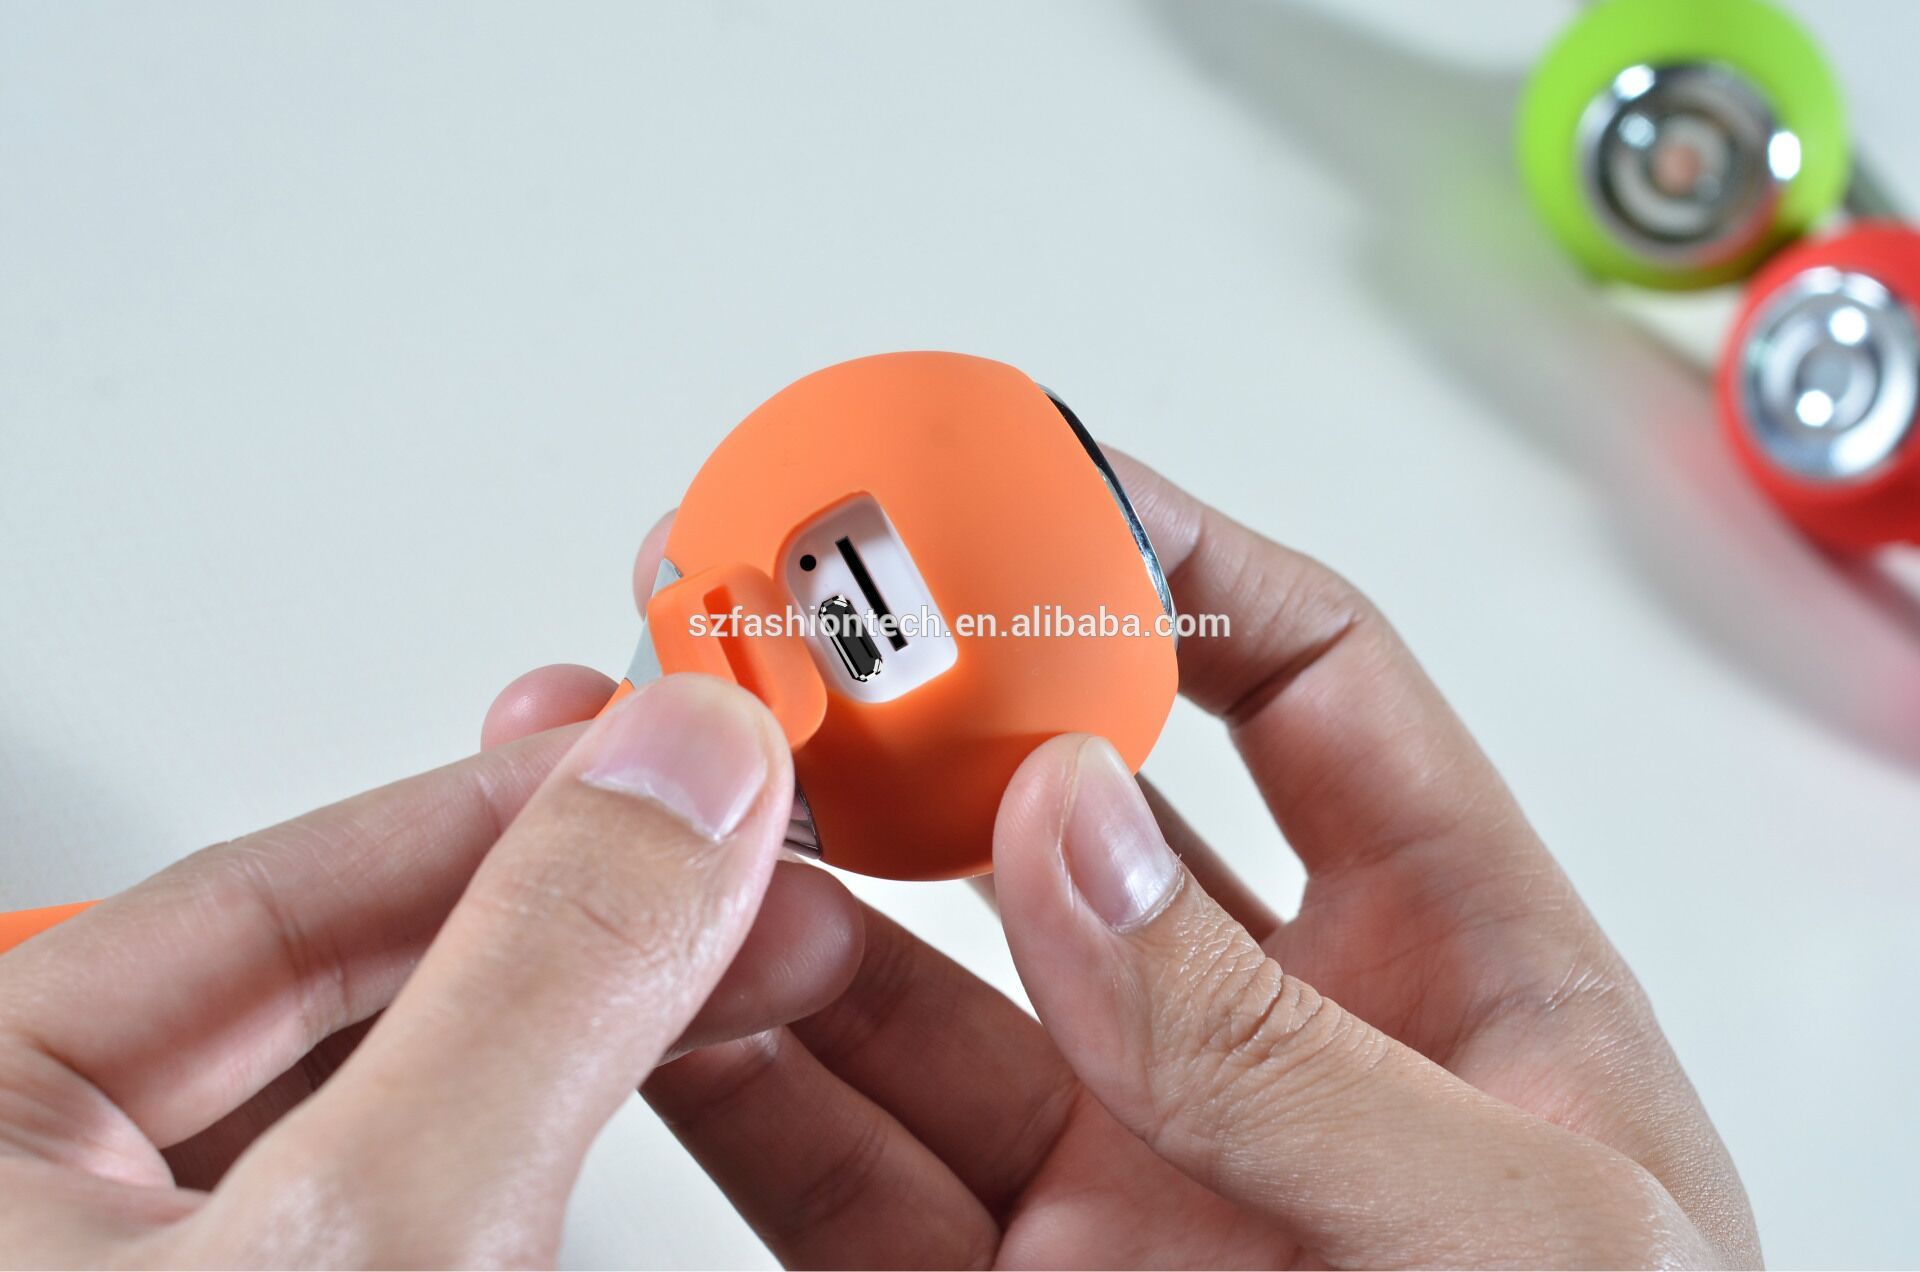 PortableMini Waterproof Bluetooth Speaker Outdoor music player